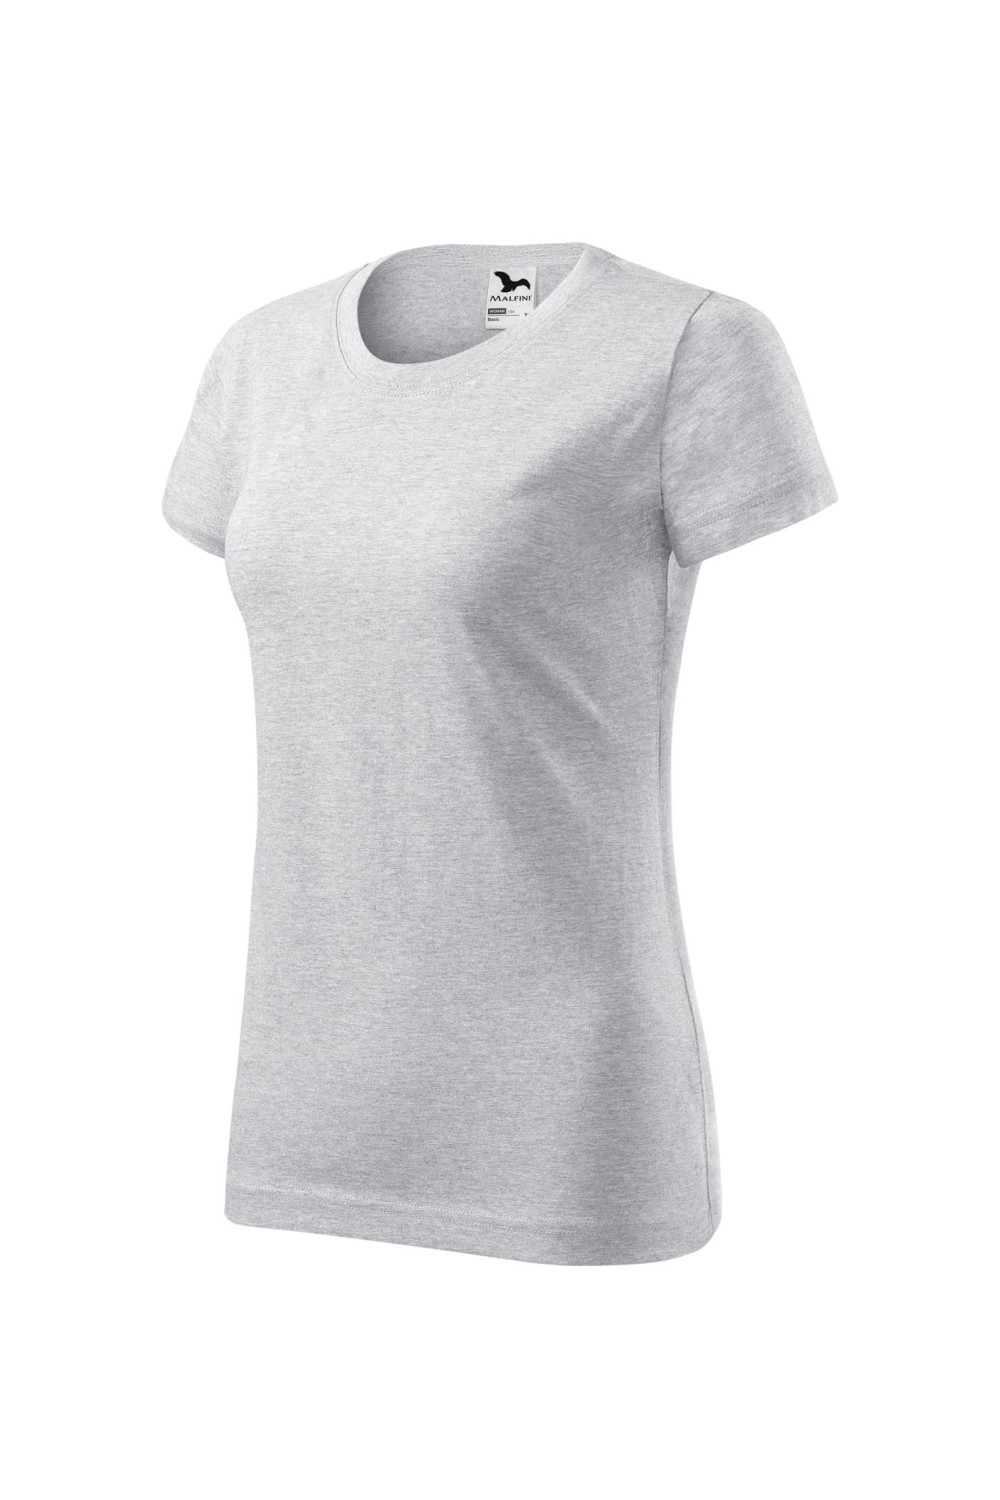 BASIC 134 MALFINI Koszulka damska 100% bawełna t-shirt jasnoszary melanż